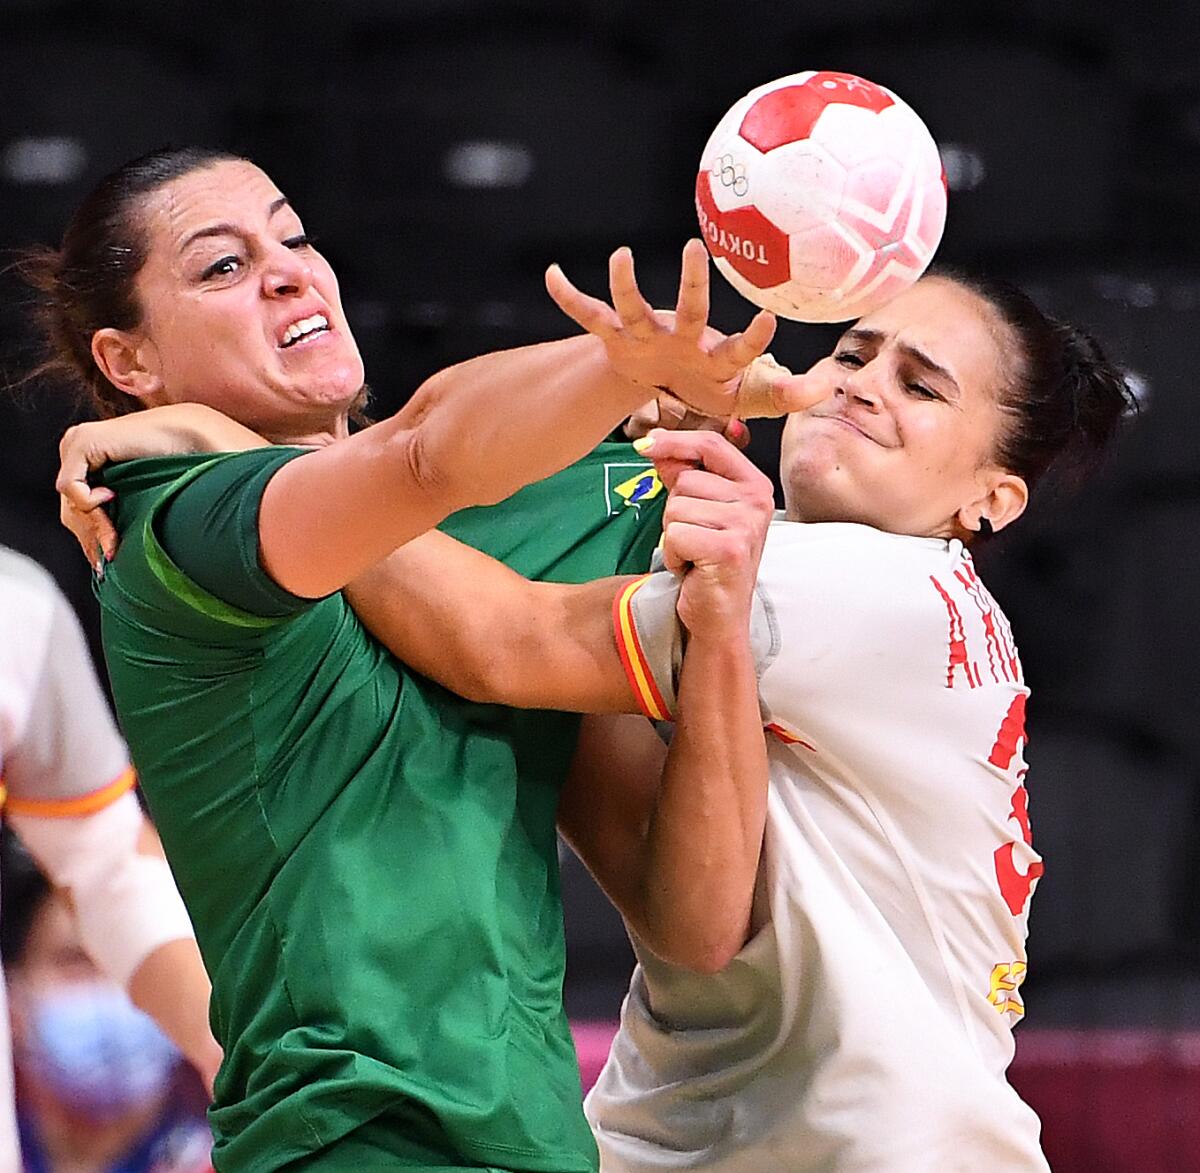 Spain's Alicia Fernandez tries to stop Brazil's Eduarda Amorim during a handball match at the Tokyo Olympics.